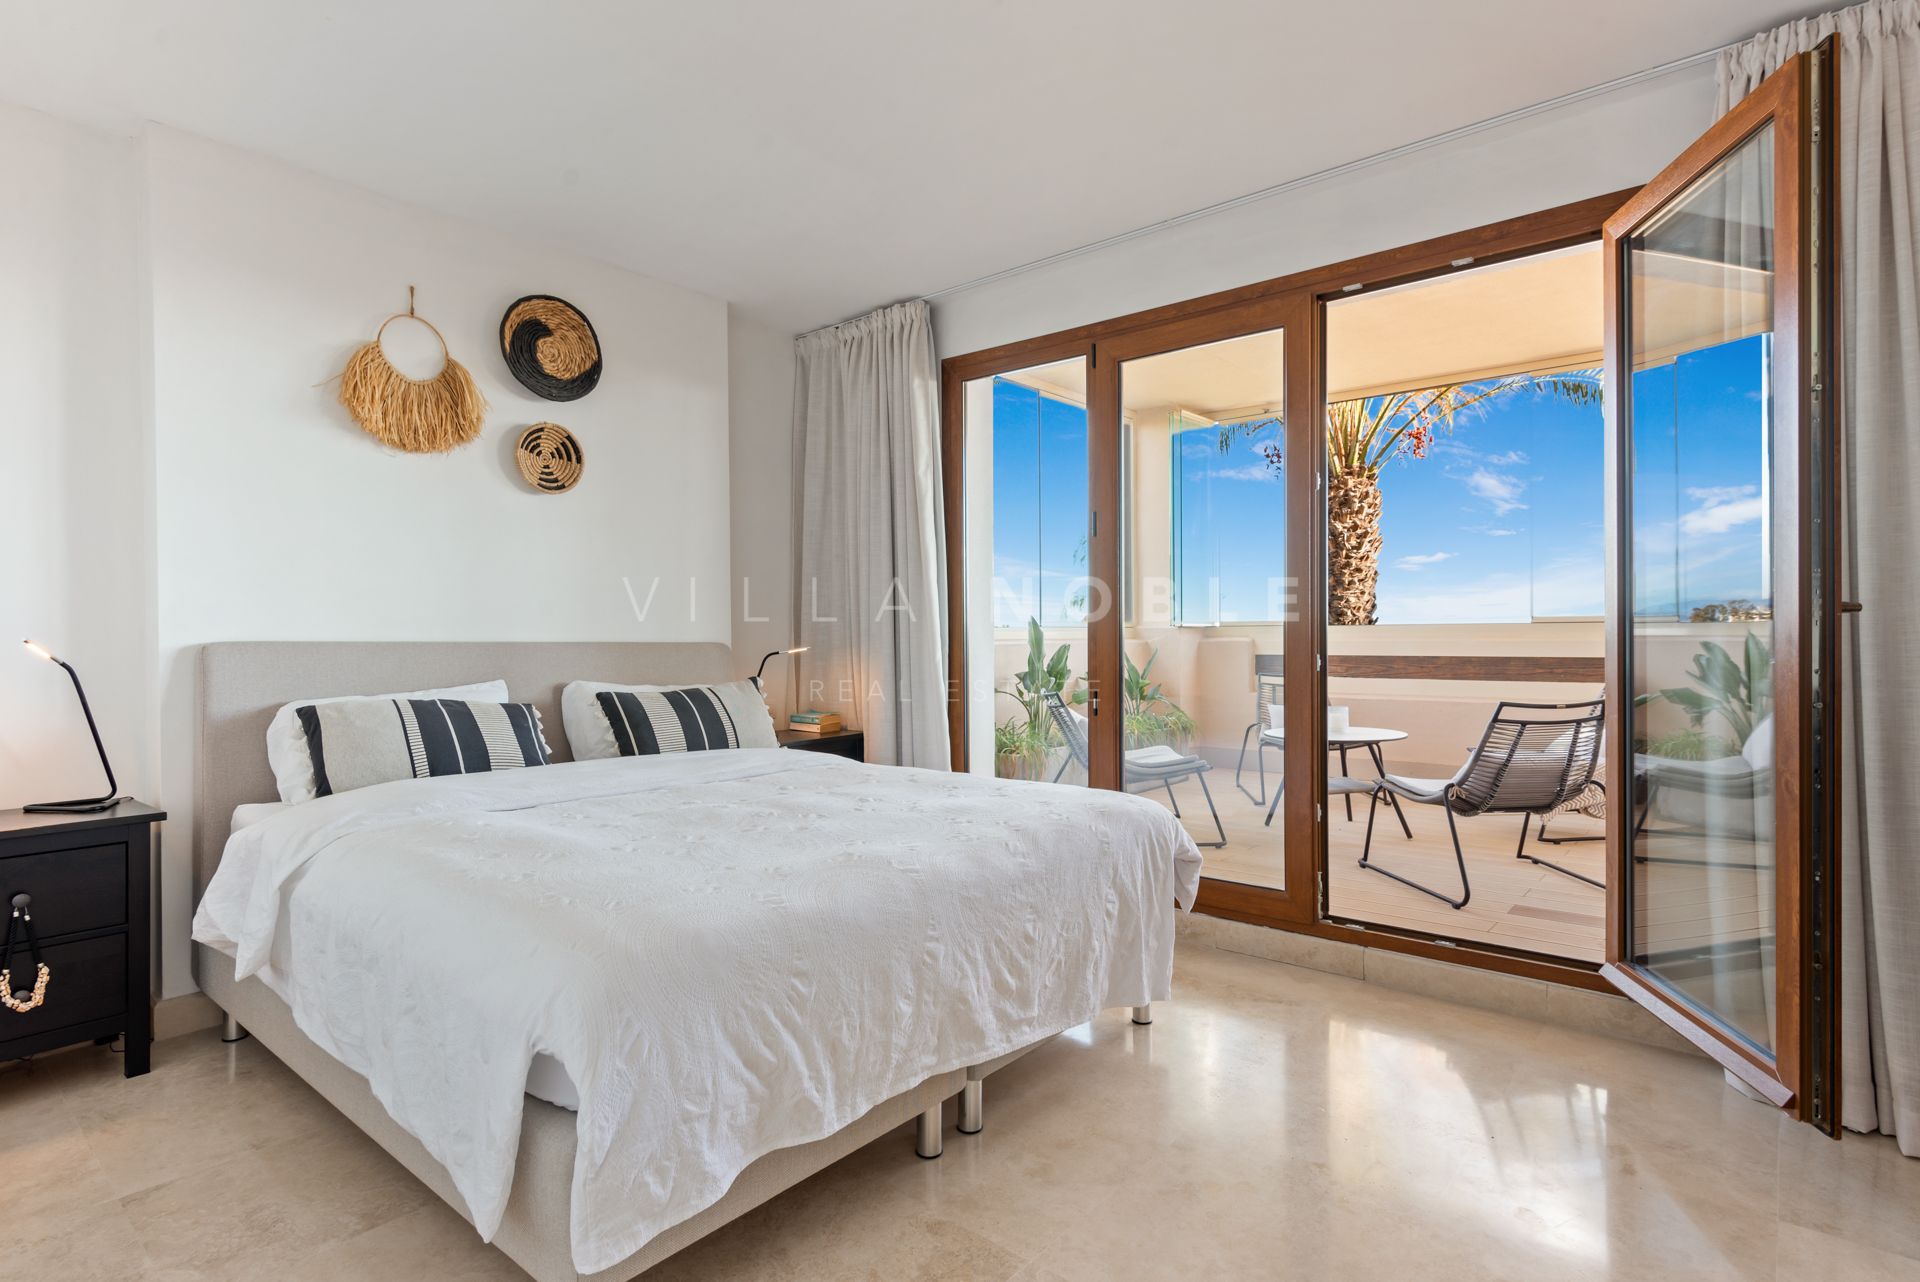 Fantastic 3 bedroom Apartment in El Paraiso Alto with panoramic views